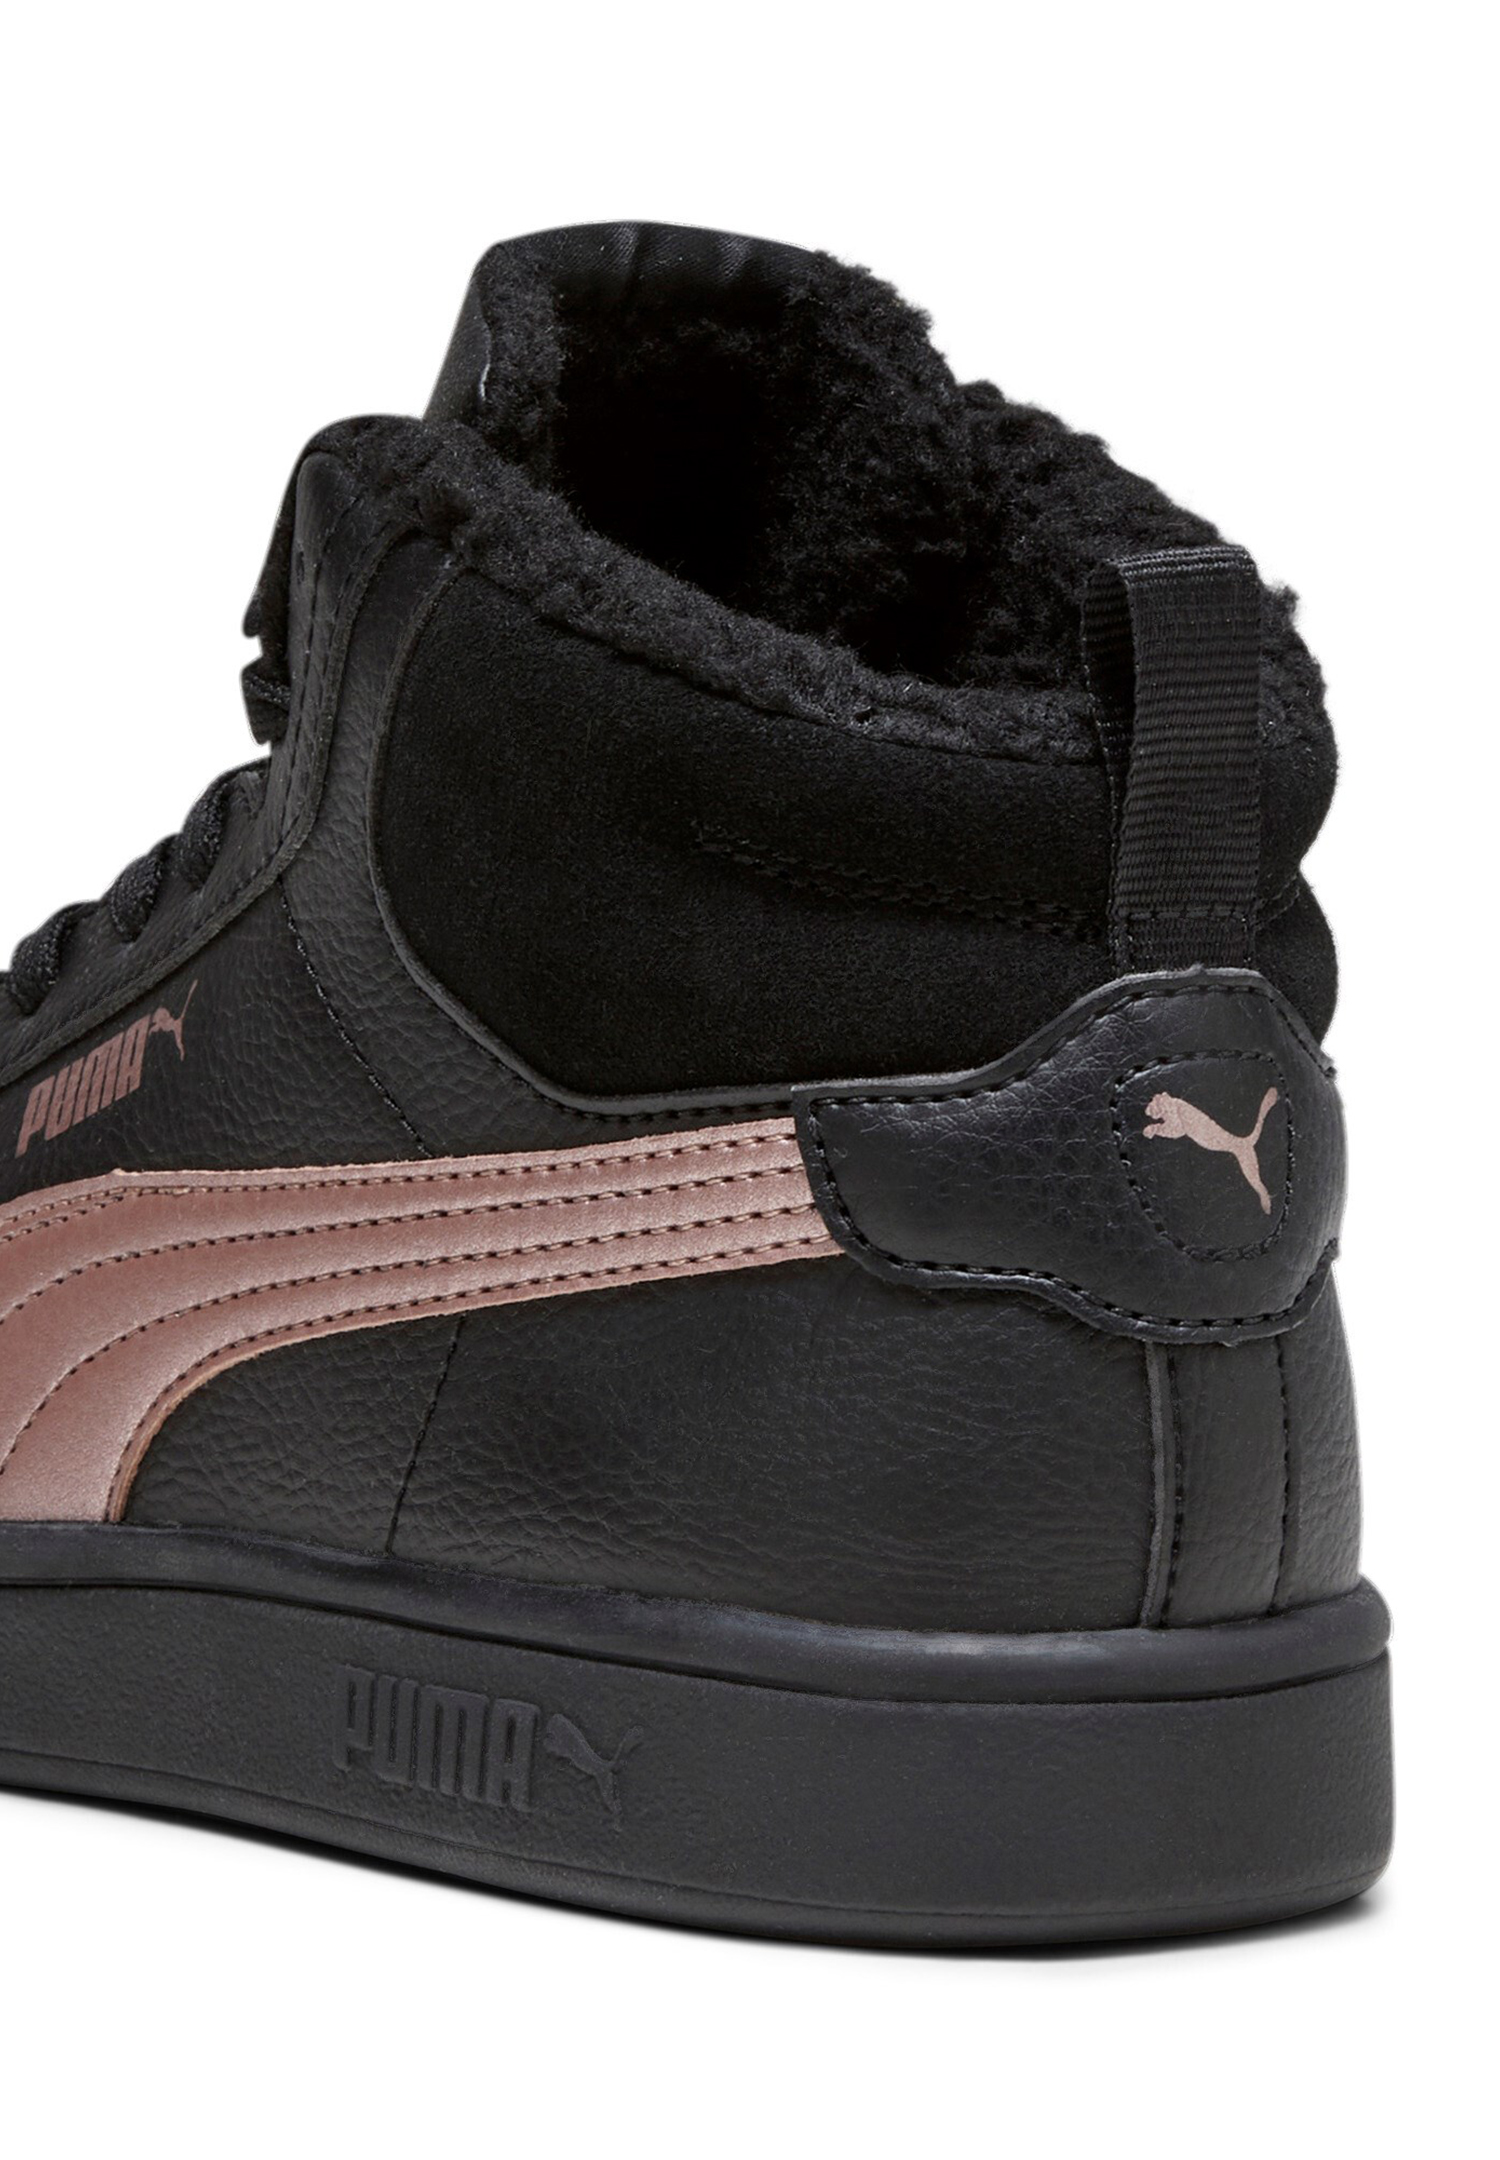 Puma SMASH 3.0 MID WTR Herren Sneaker Winterschuhe 392335 05 schwarz